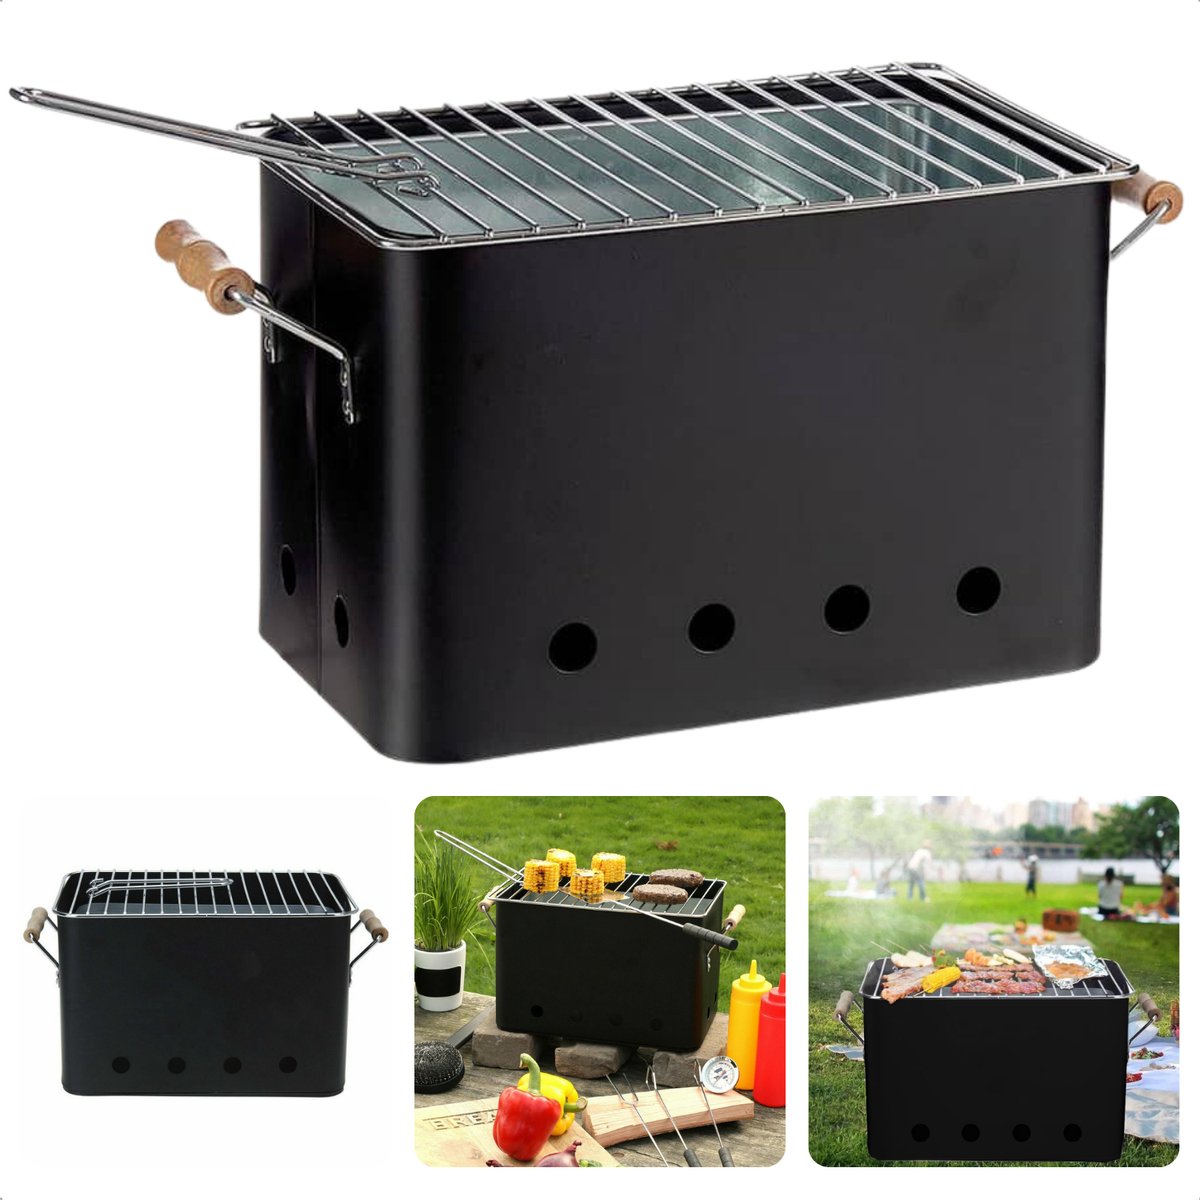 Cheqo® Draagbare BBQ - Kleine Barbecue voor Camping - Houtskoolbarbecue - Compact Ontwerp - 72x24cm - Zwart